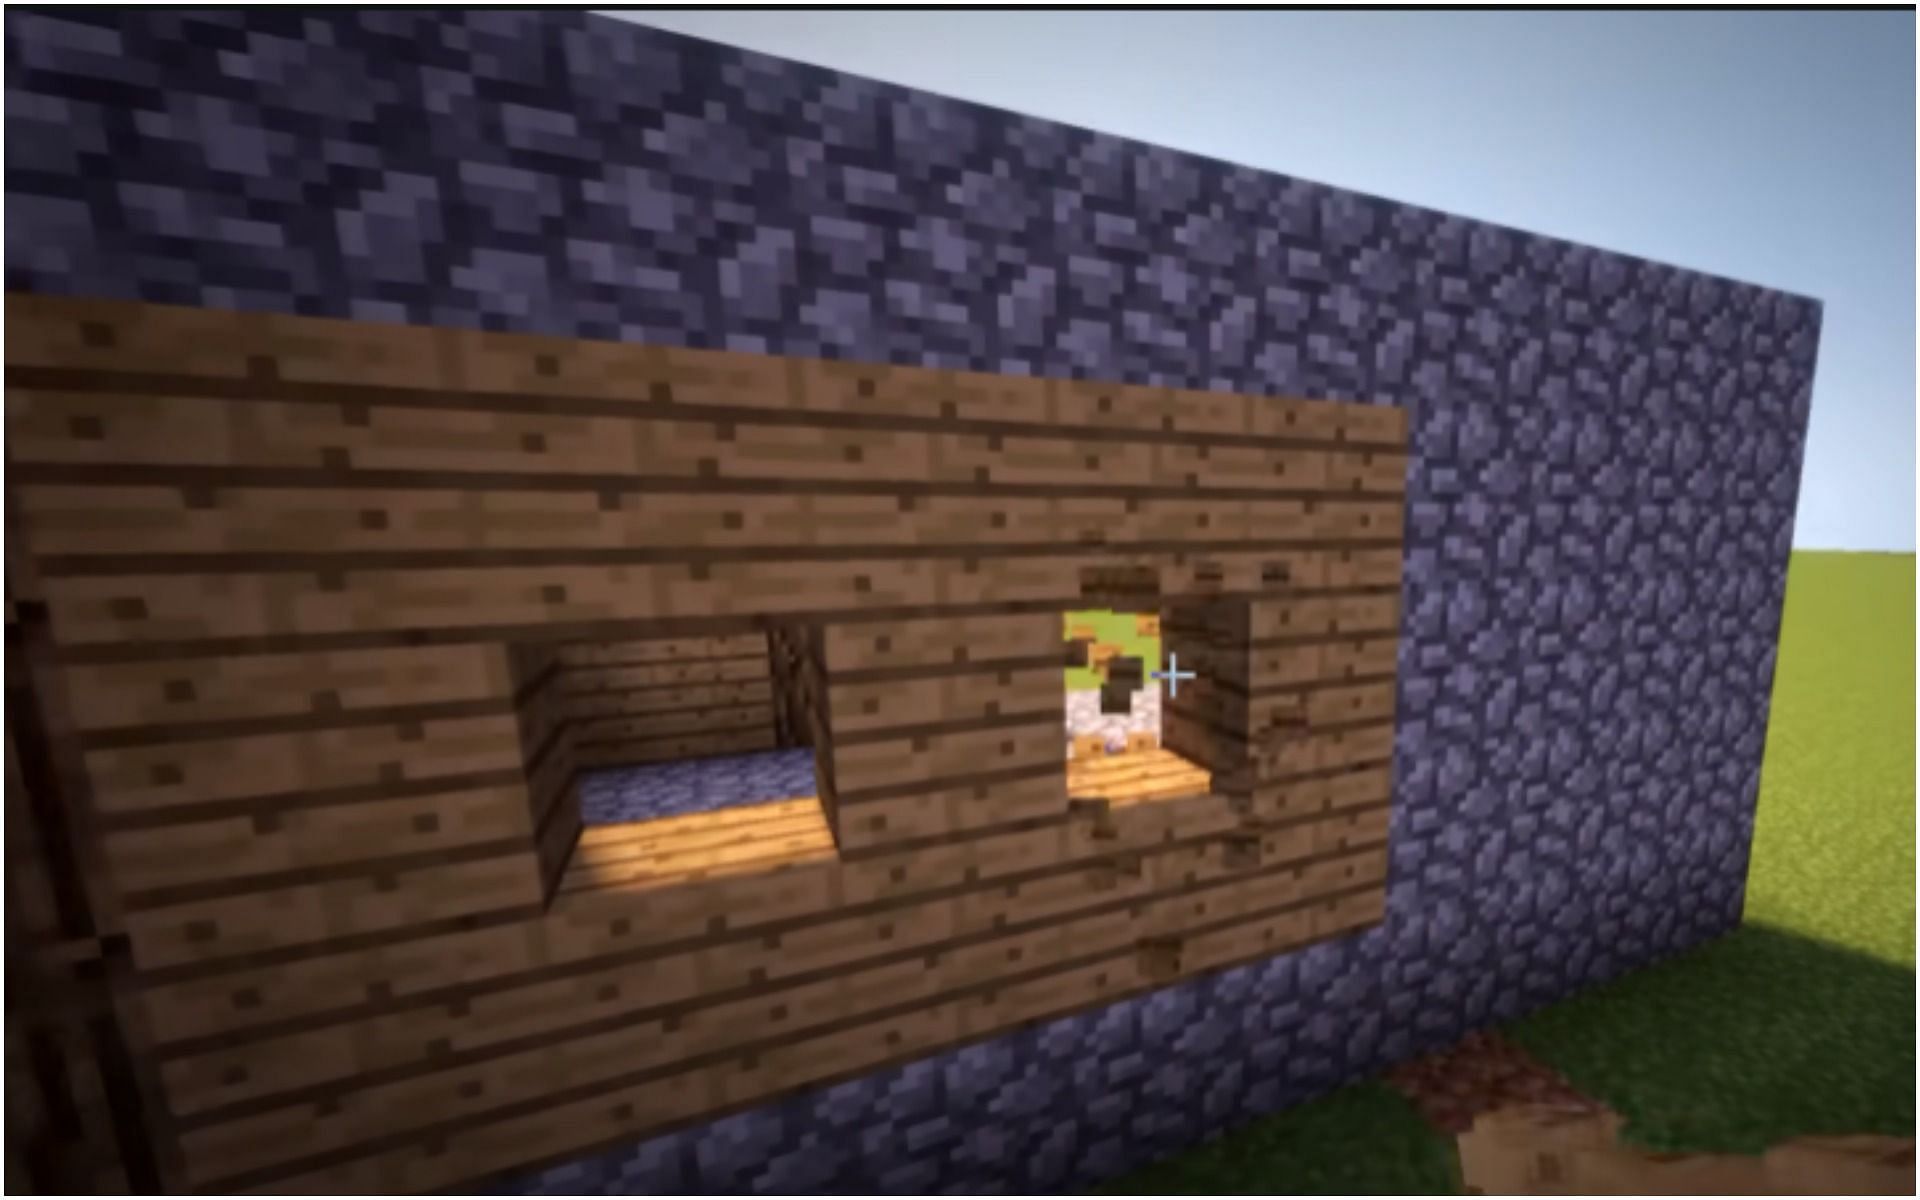 Windows in the hosue (Image via Minecraft)